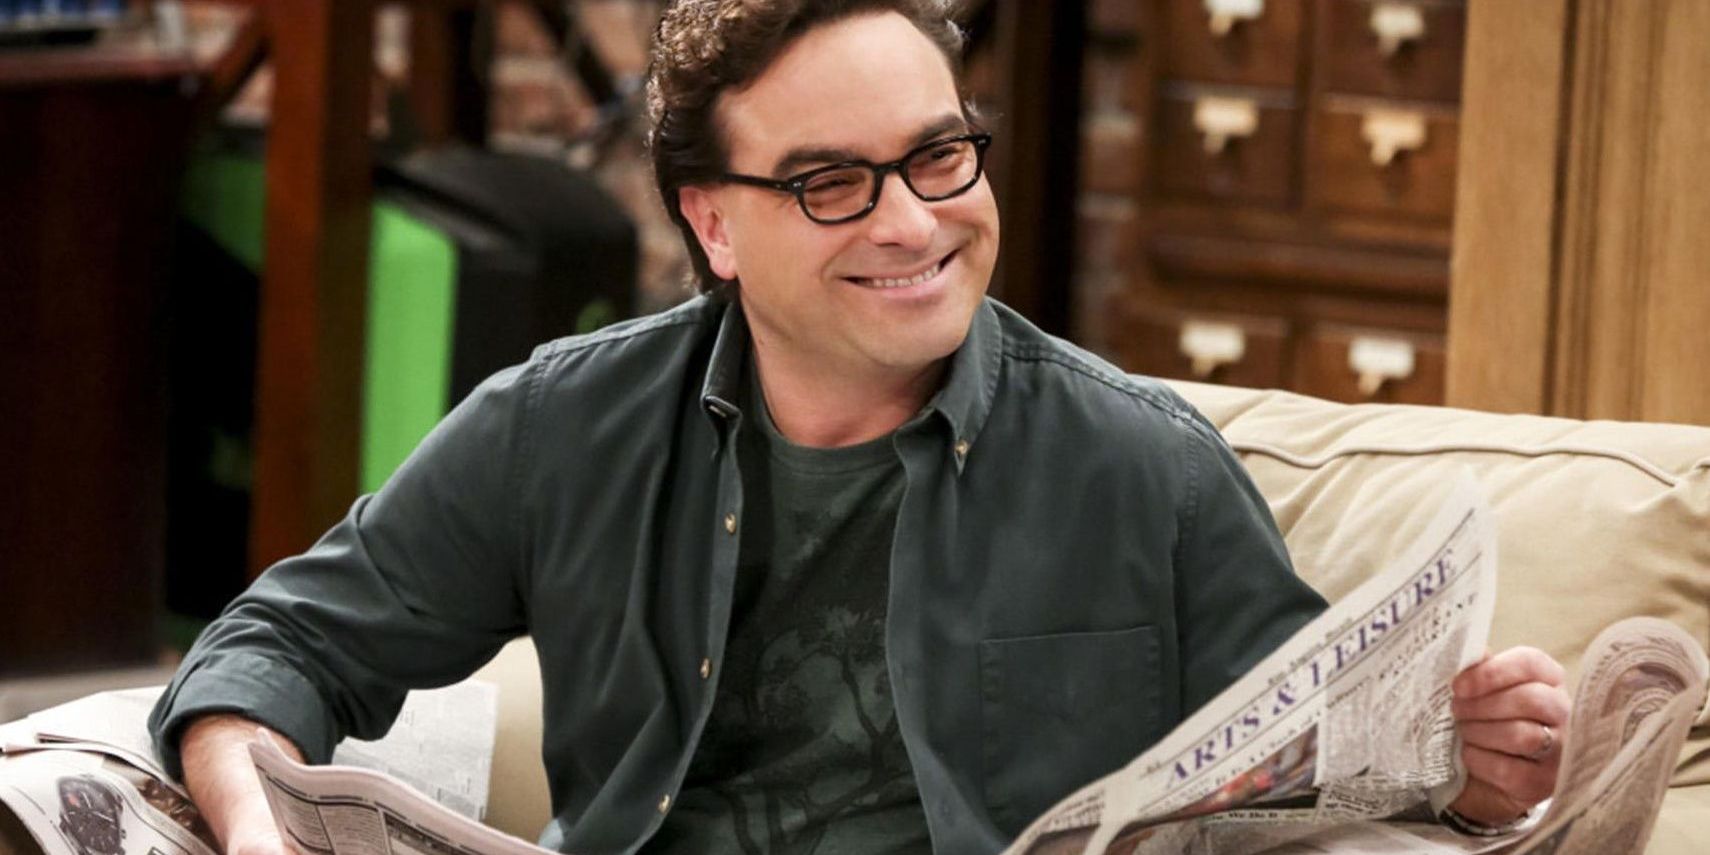 Leonard in The Big Bang Theory.